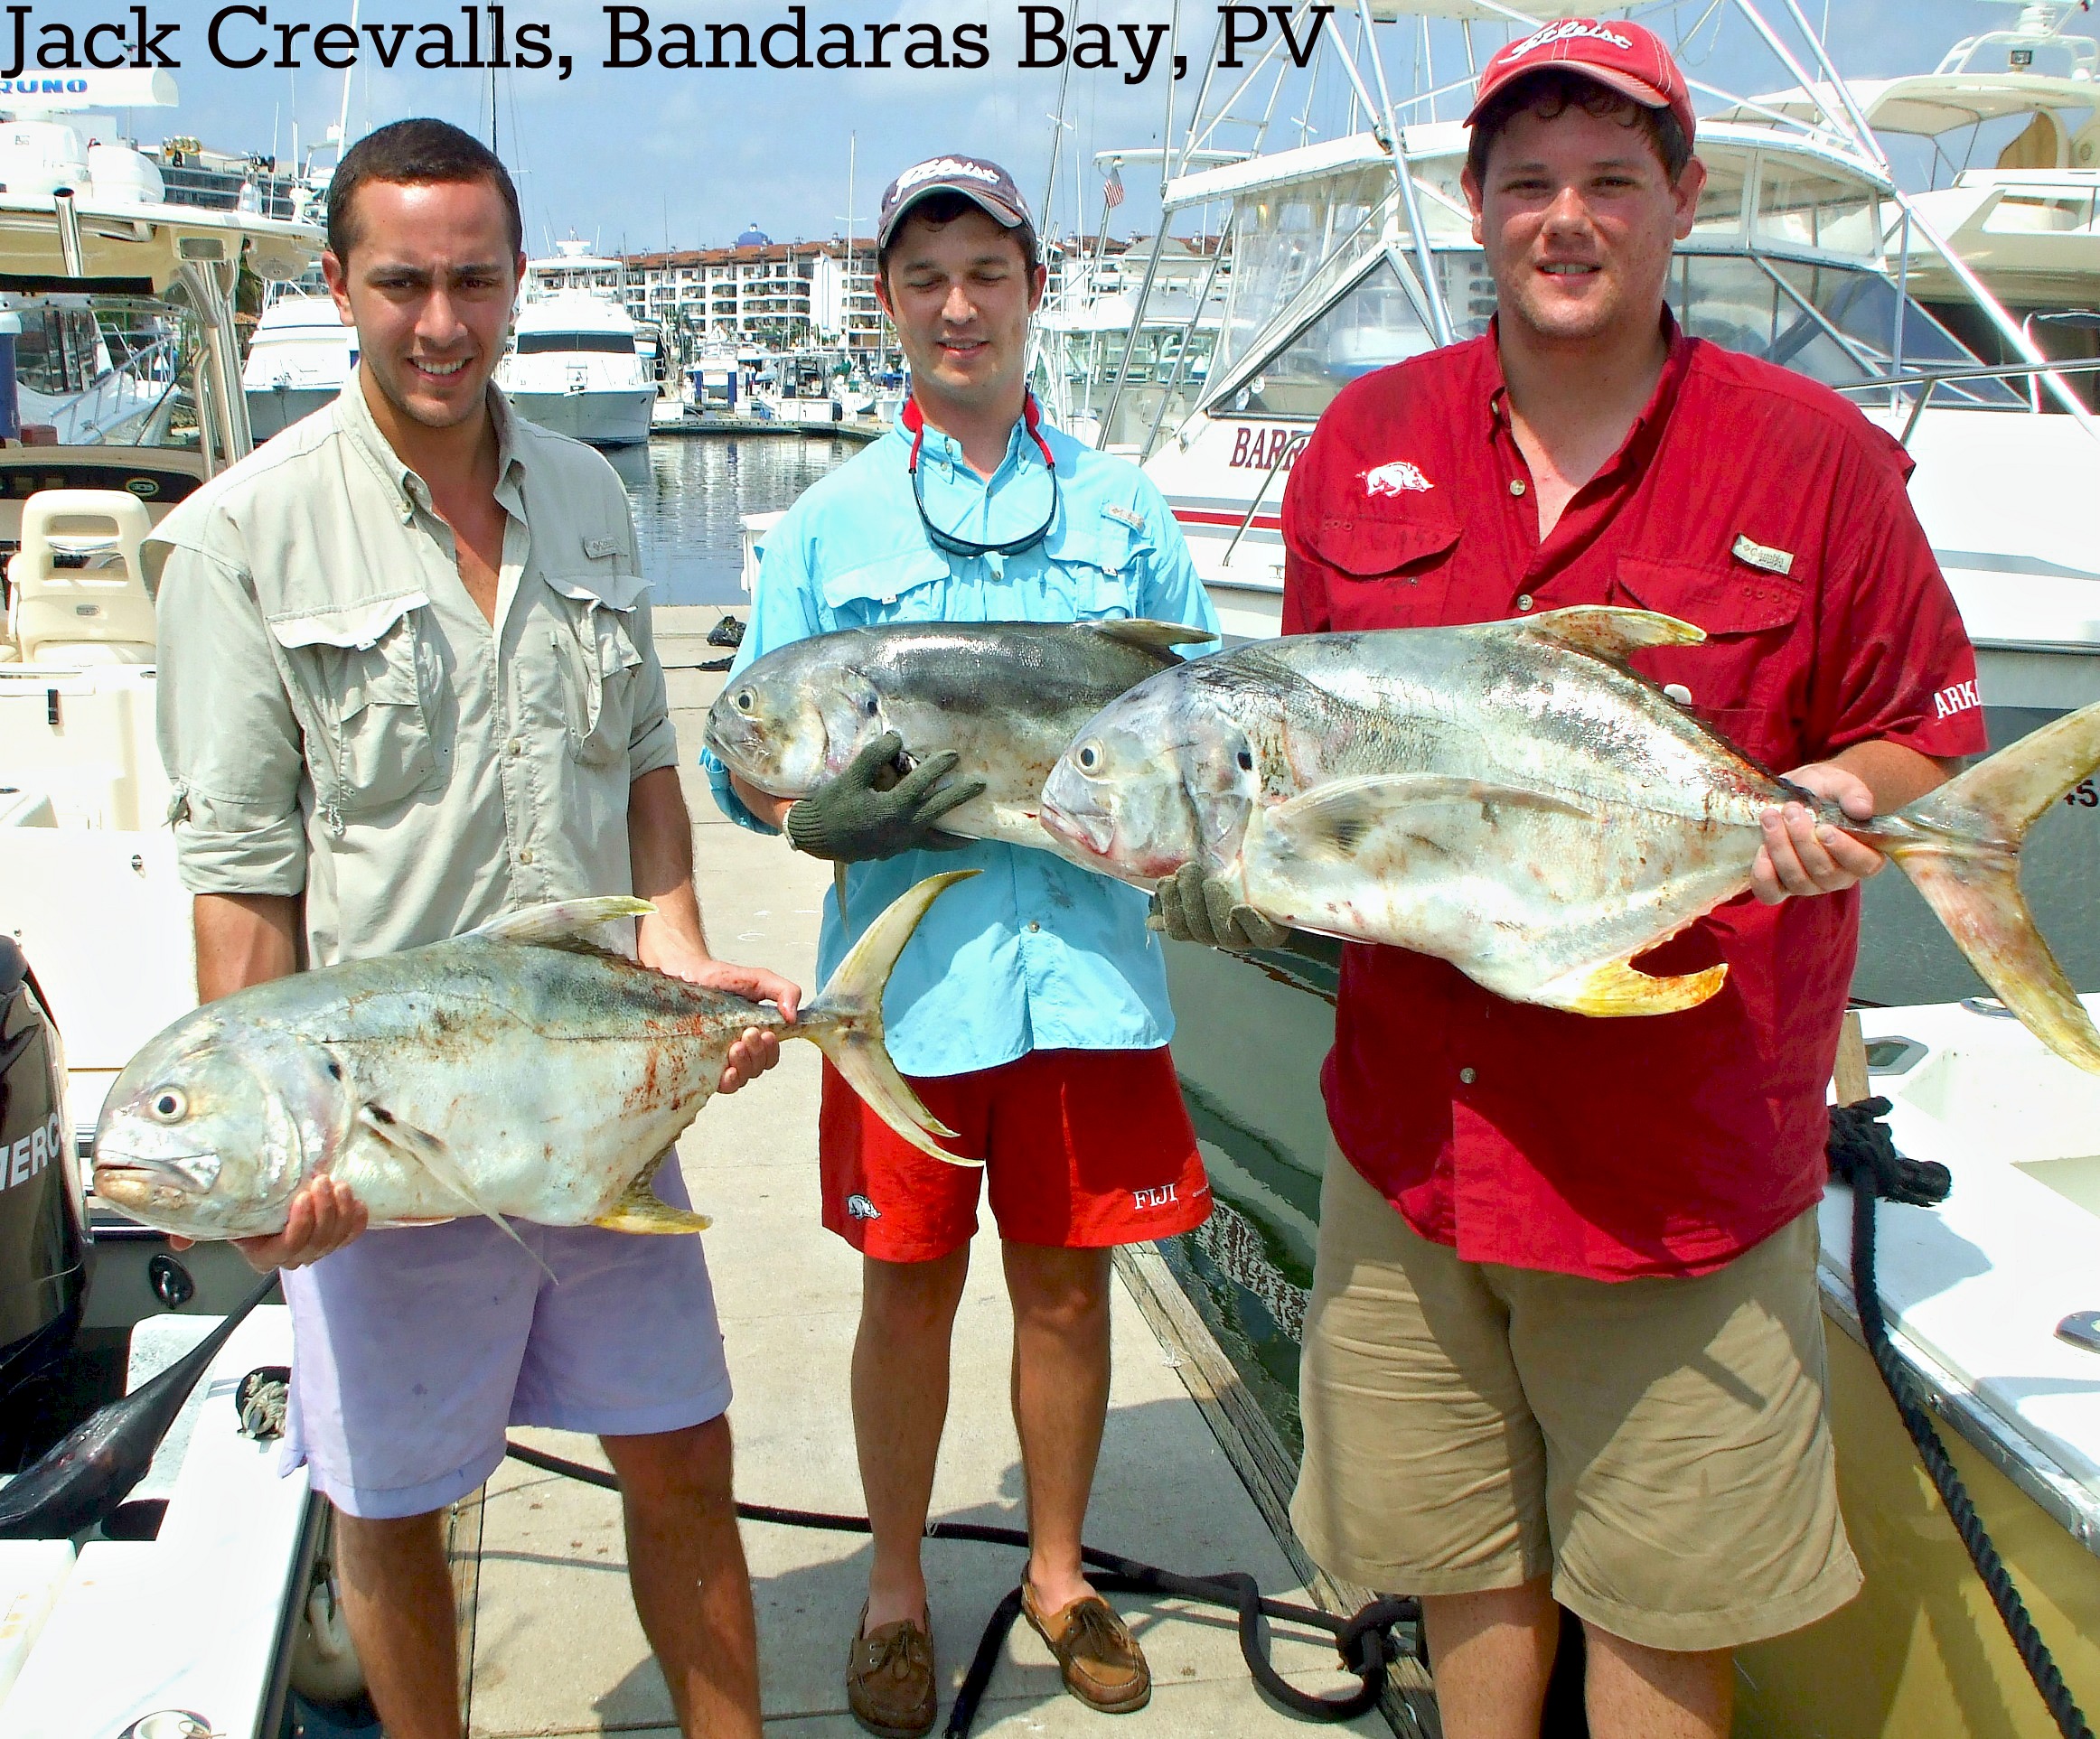 09 13 2014 Magnifico Jack Crevalls, Bay fishing